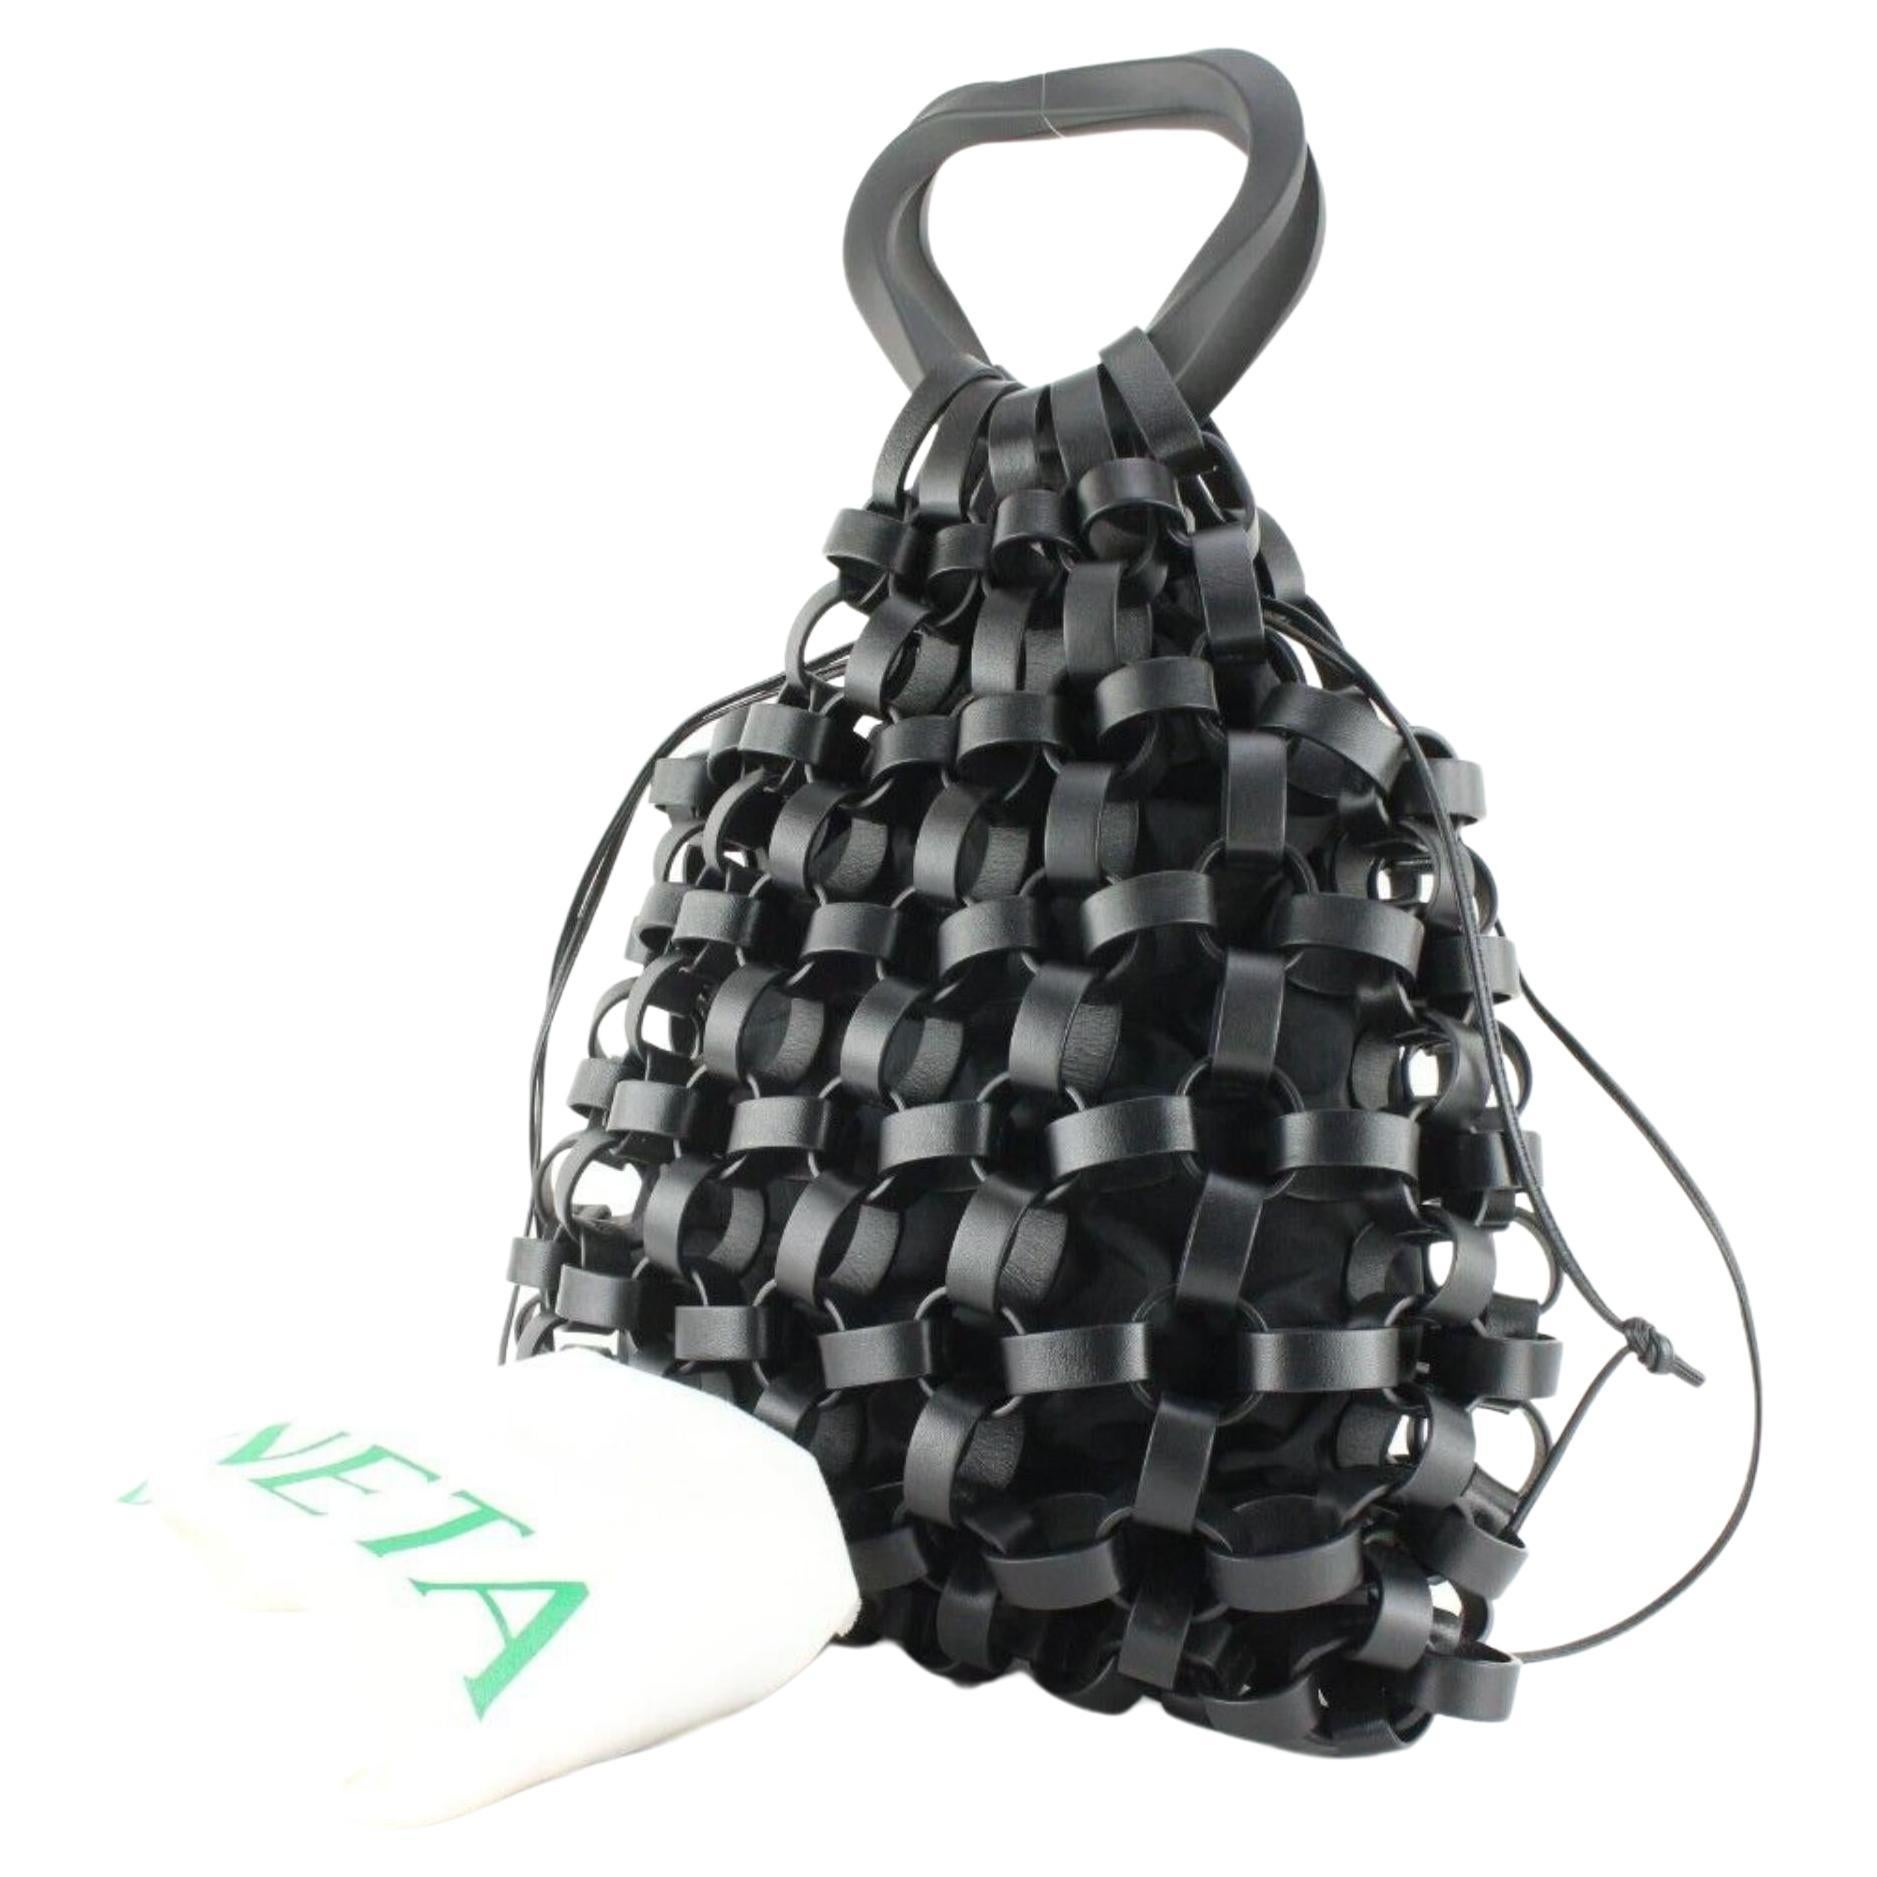 Louis Vuitton Black EPI Petit Bag